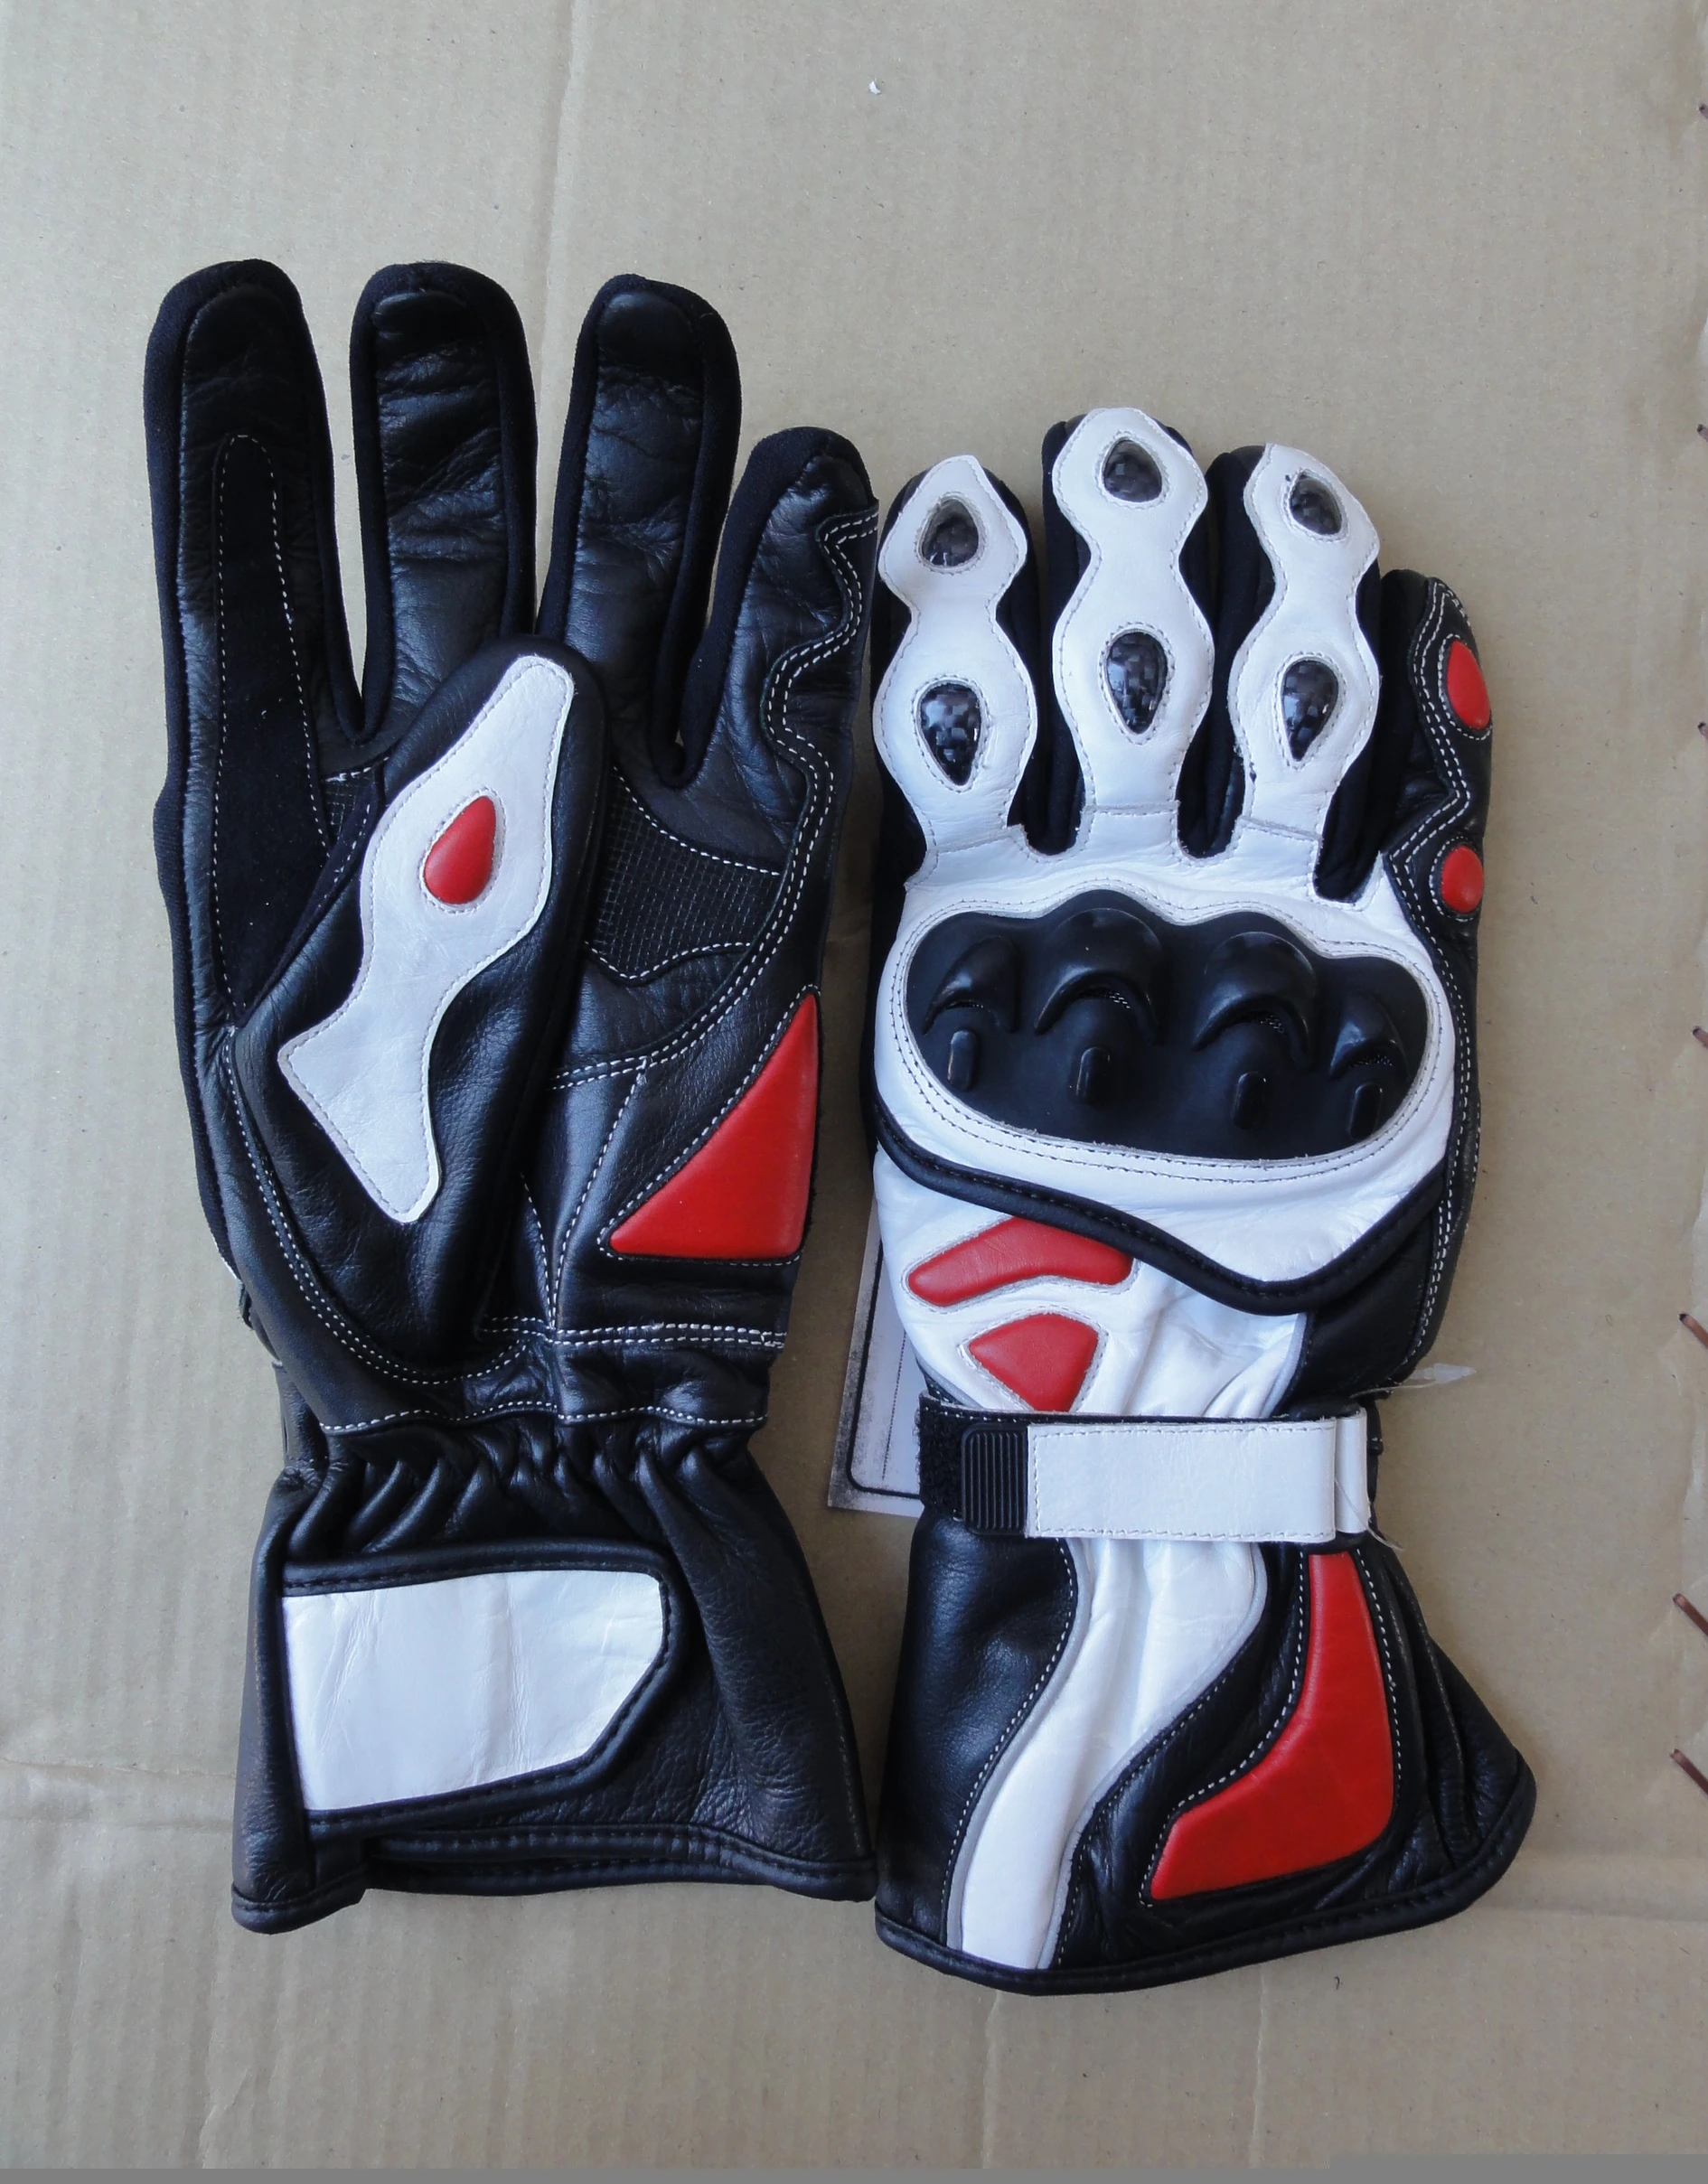 Mes Real Genuine Leather Long Motorcycle Full Finger Racing Motorbike gloves